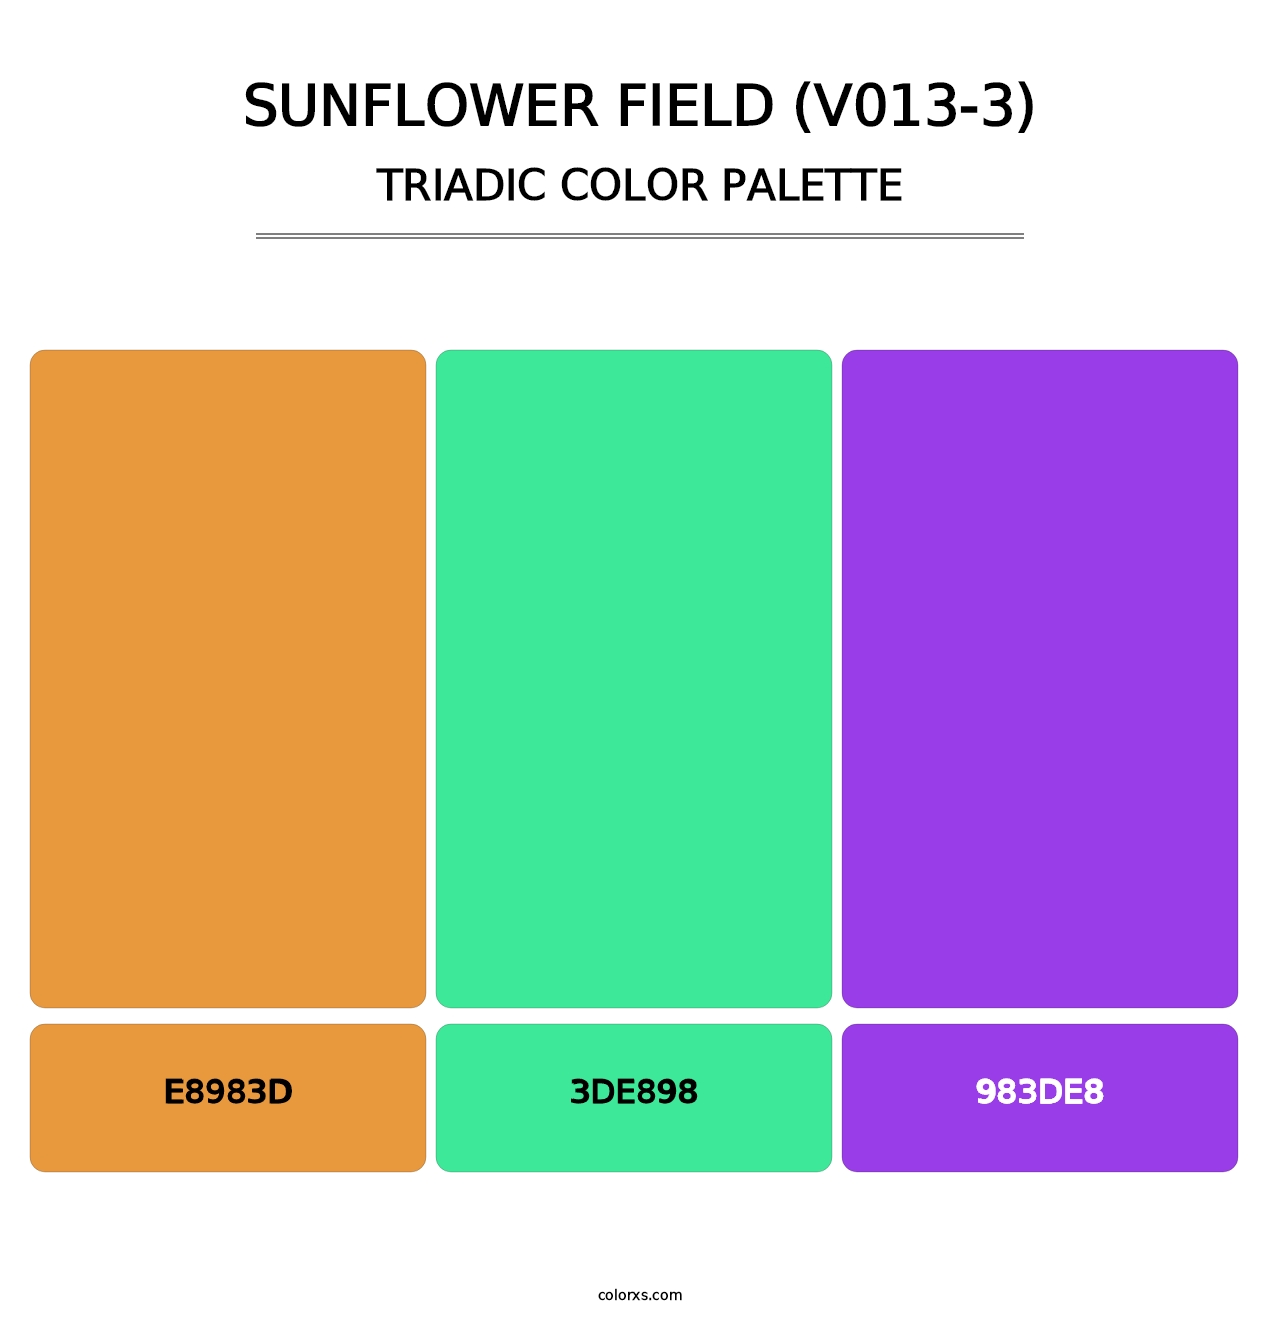 Sunflower Field (V013-3) - Triadic Color Palette